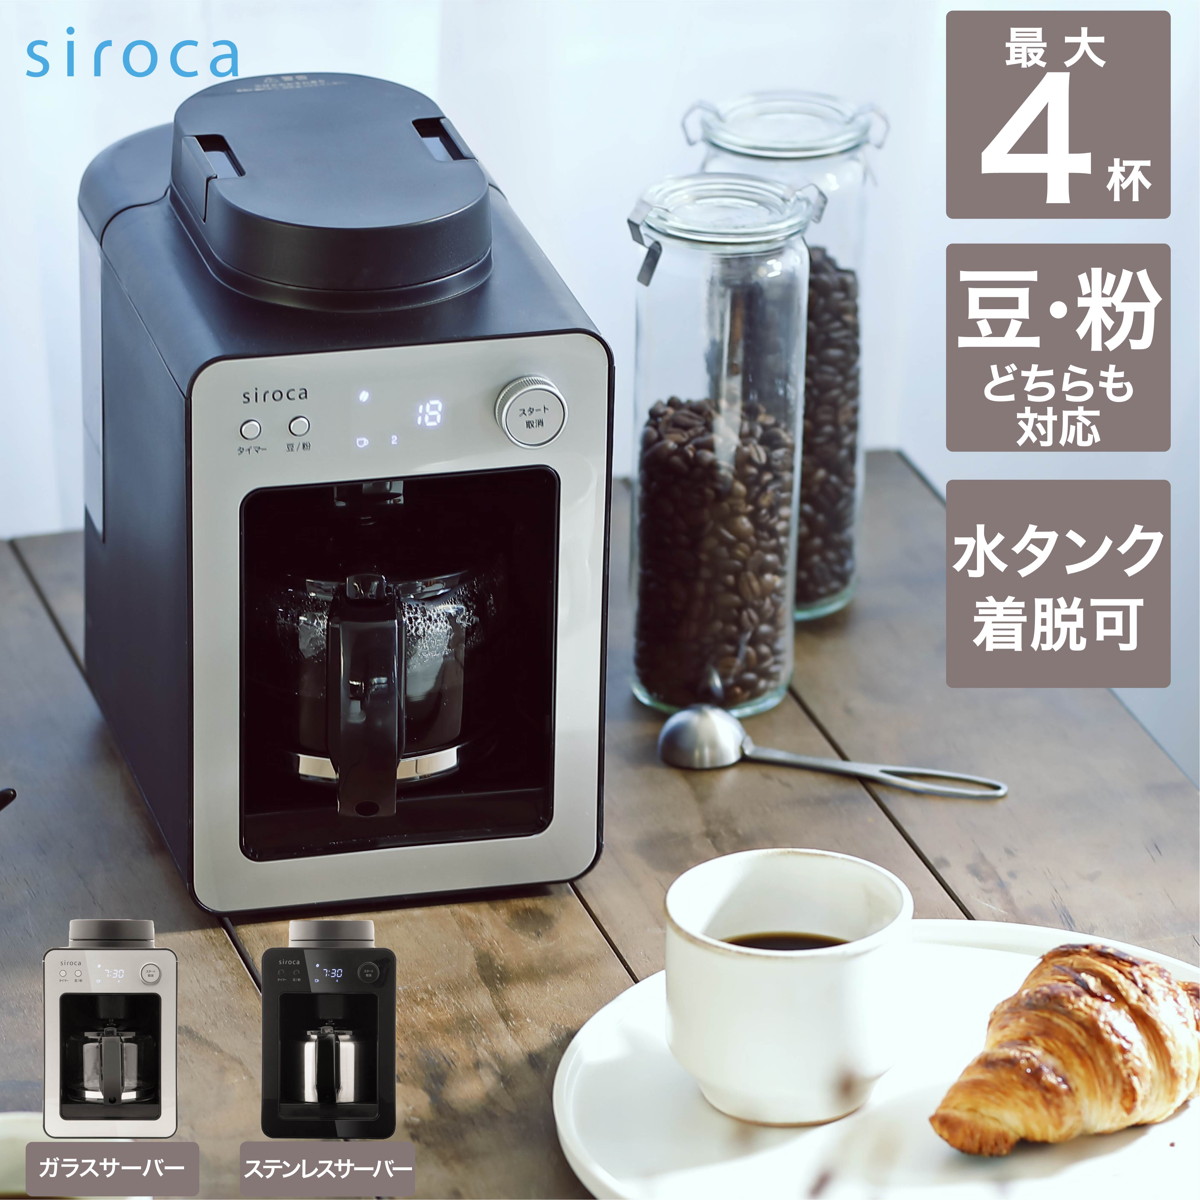 siroca 全自動コーヒーメーカー シルバー